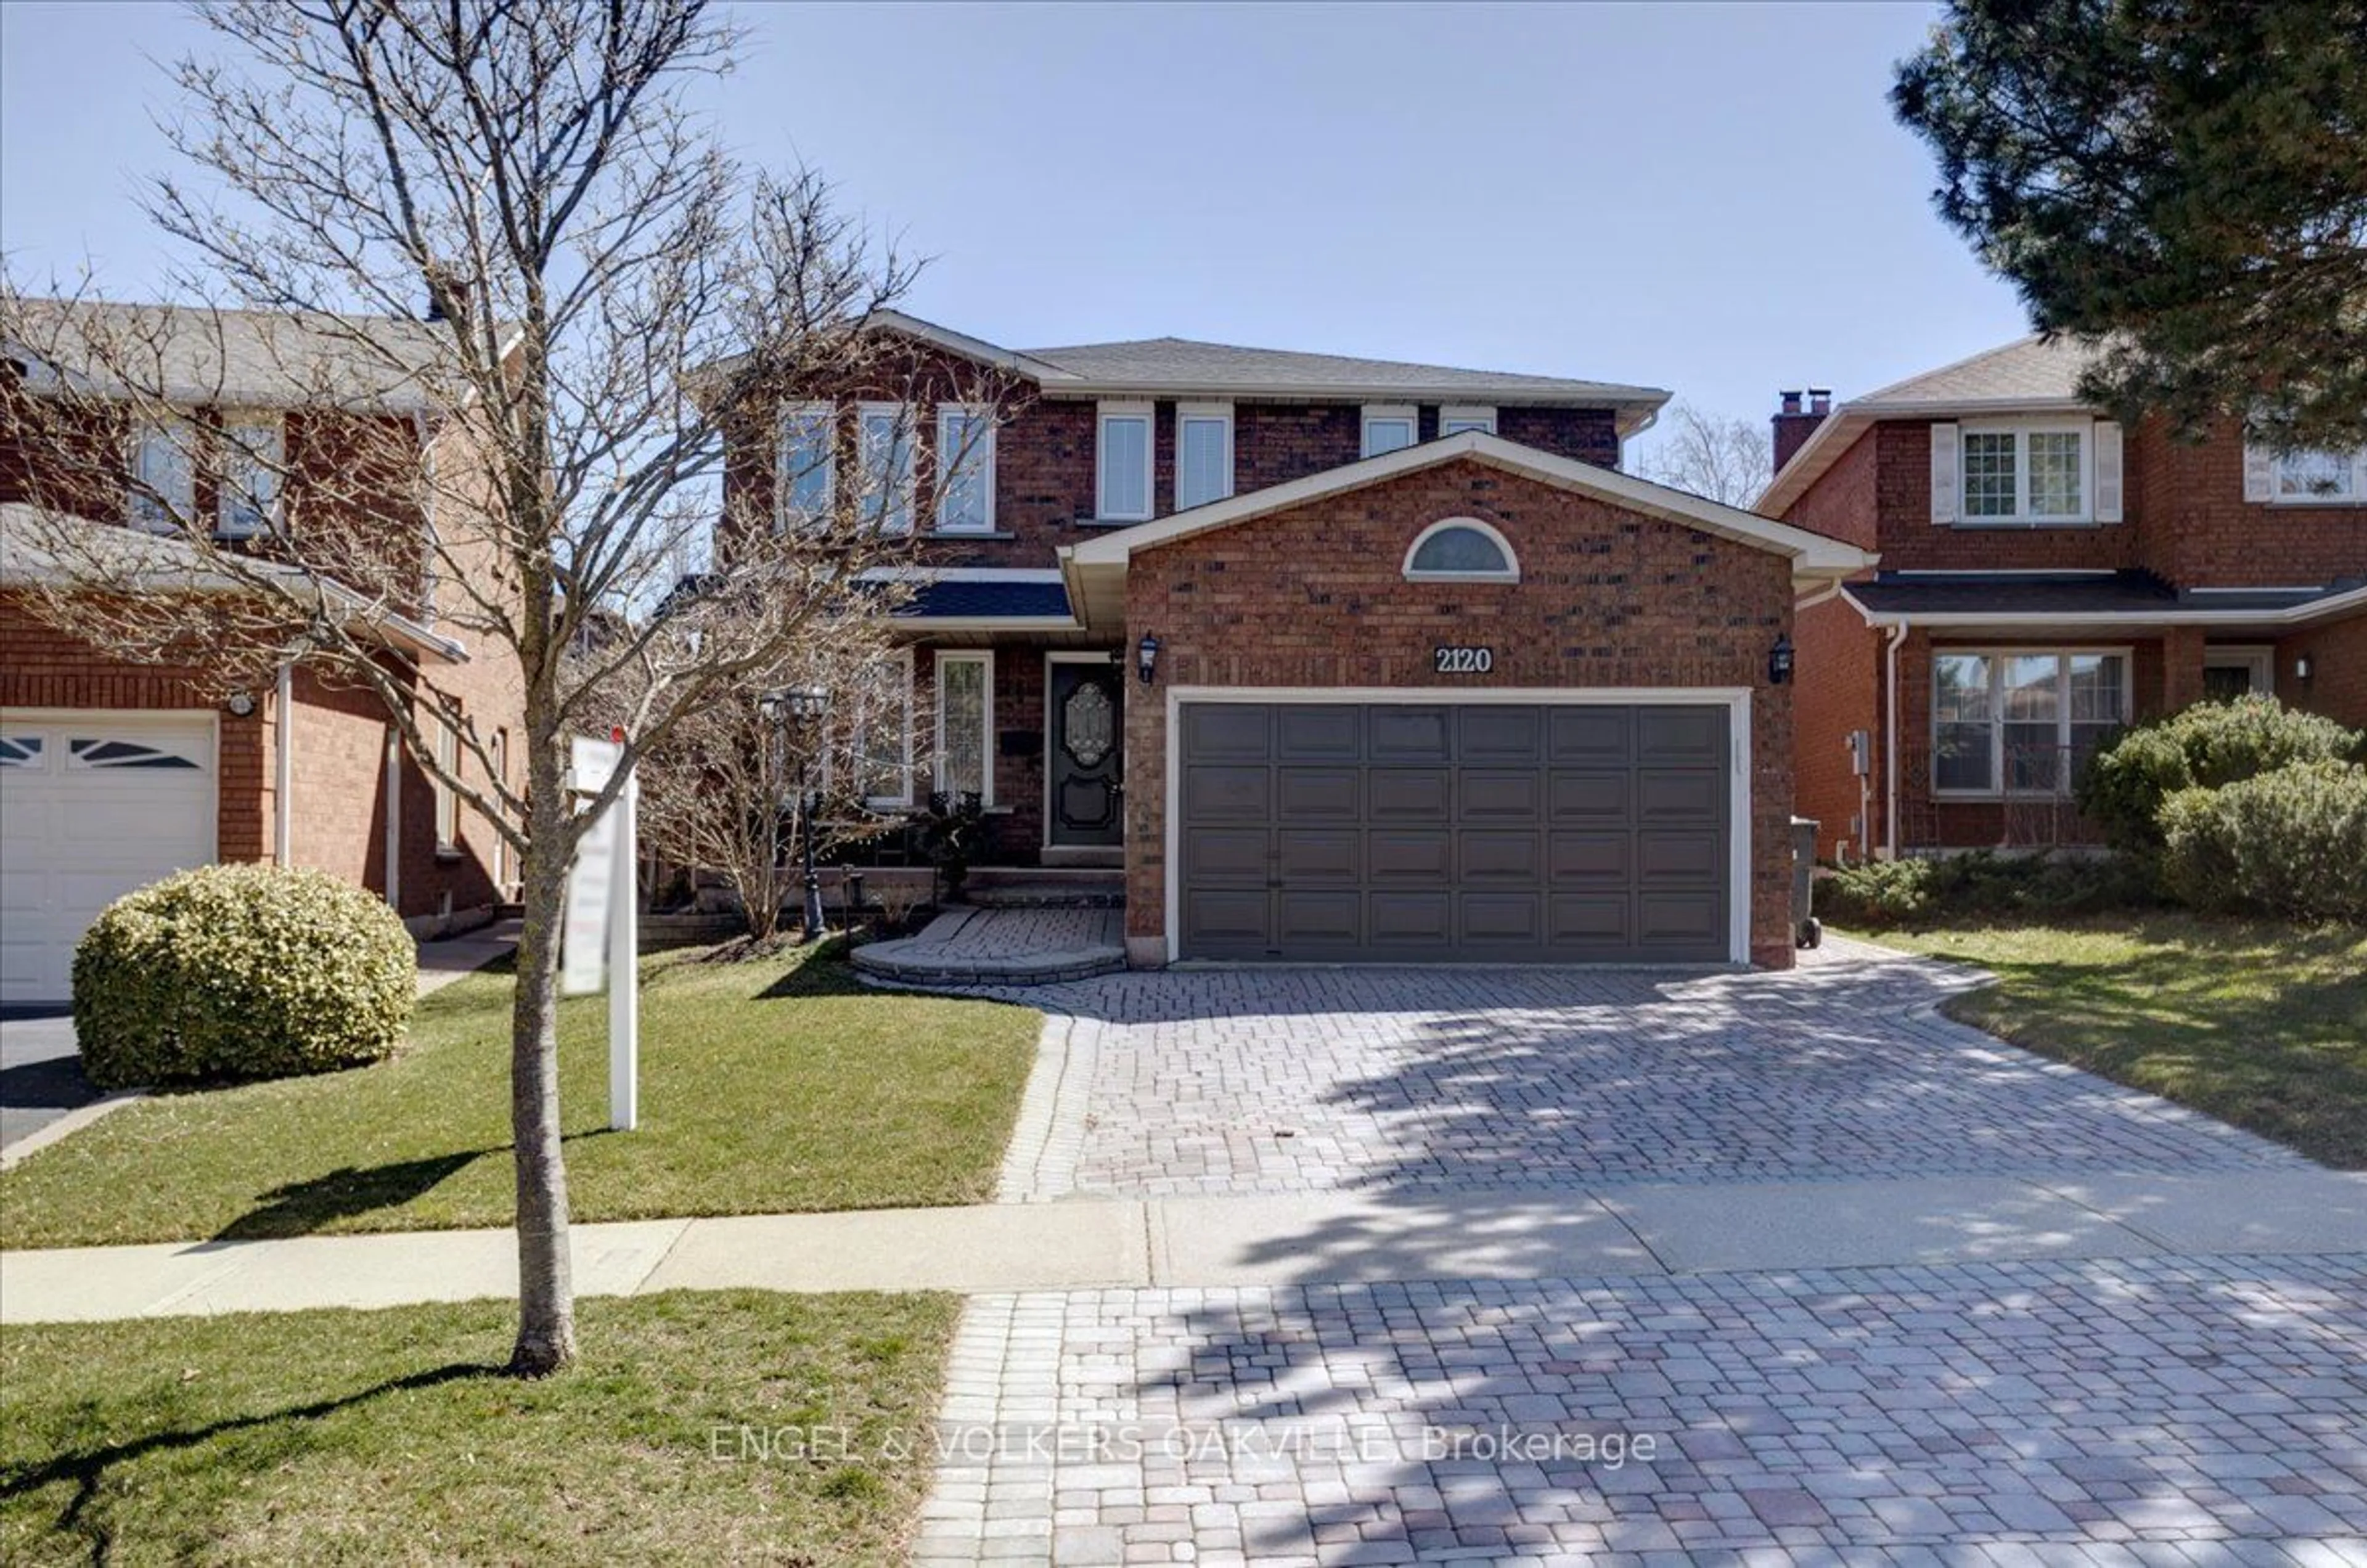 Home with brick exterior material for 2120 Wincanton Cres, Mississauga Ontario L5M 3E4